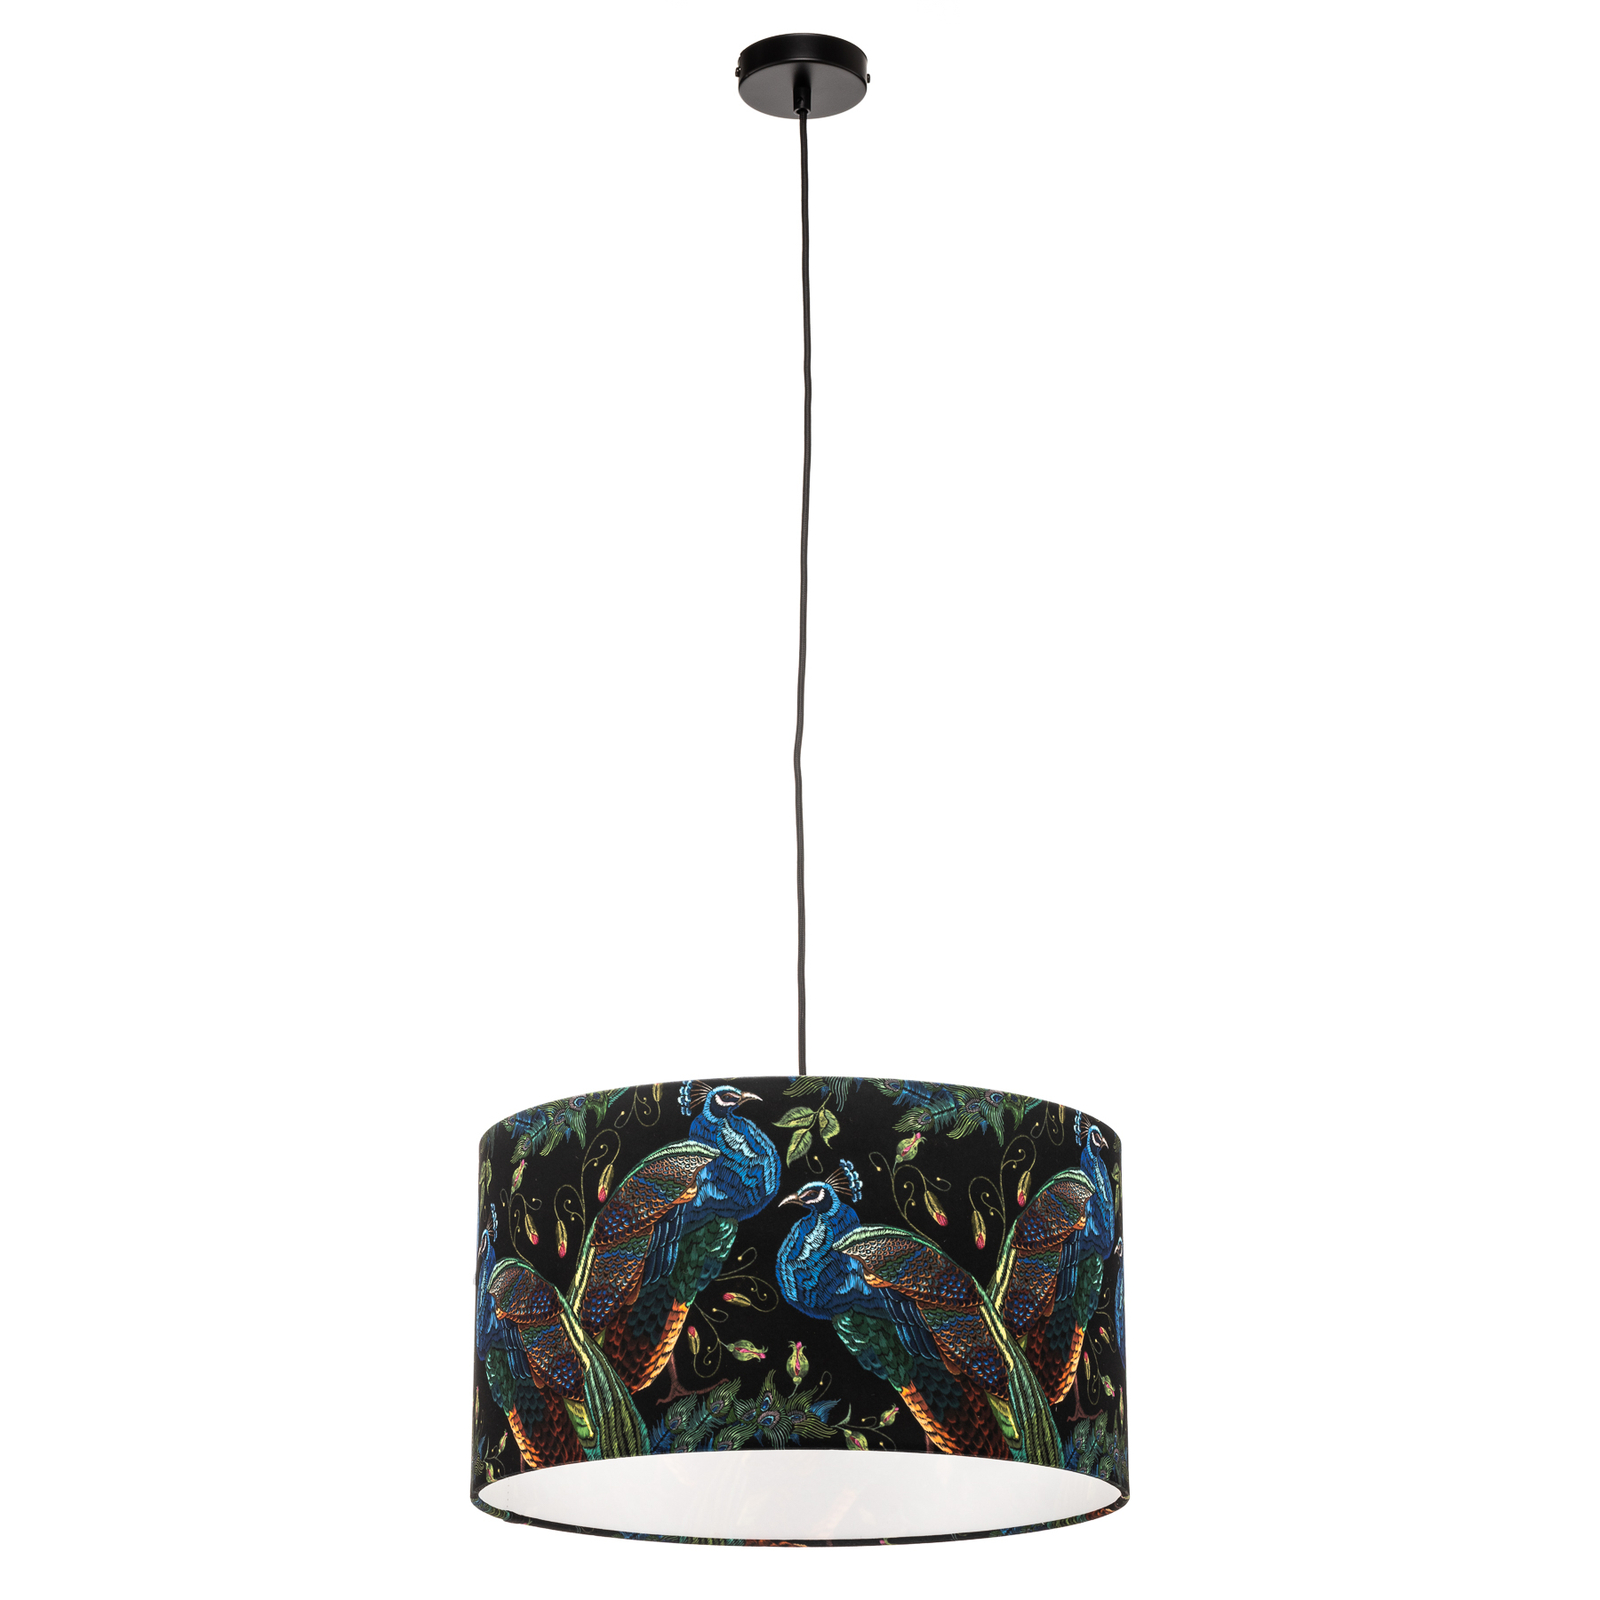 Peacock pendant light, diameter 45 cm, black